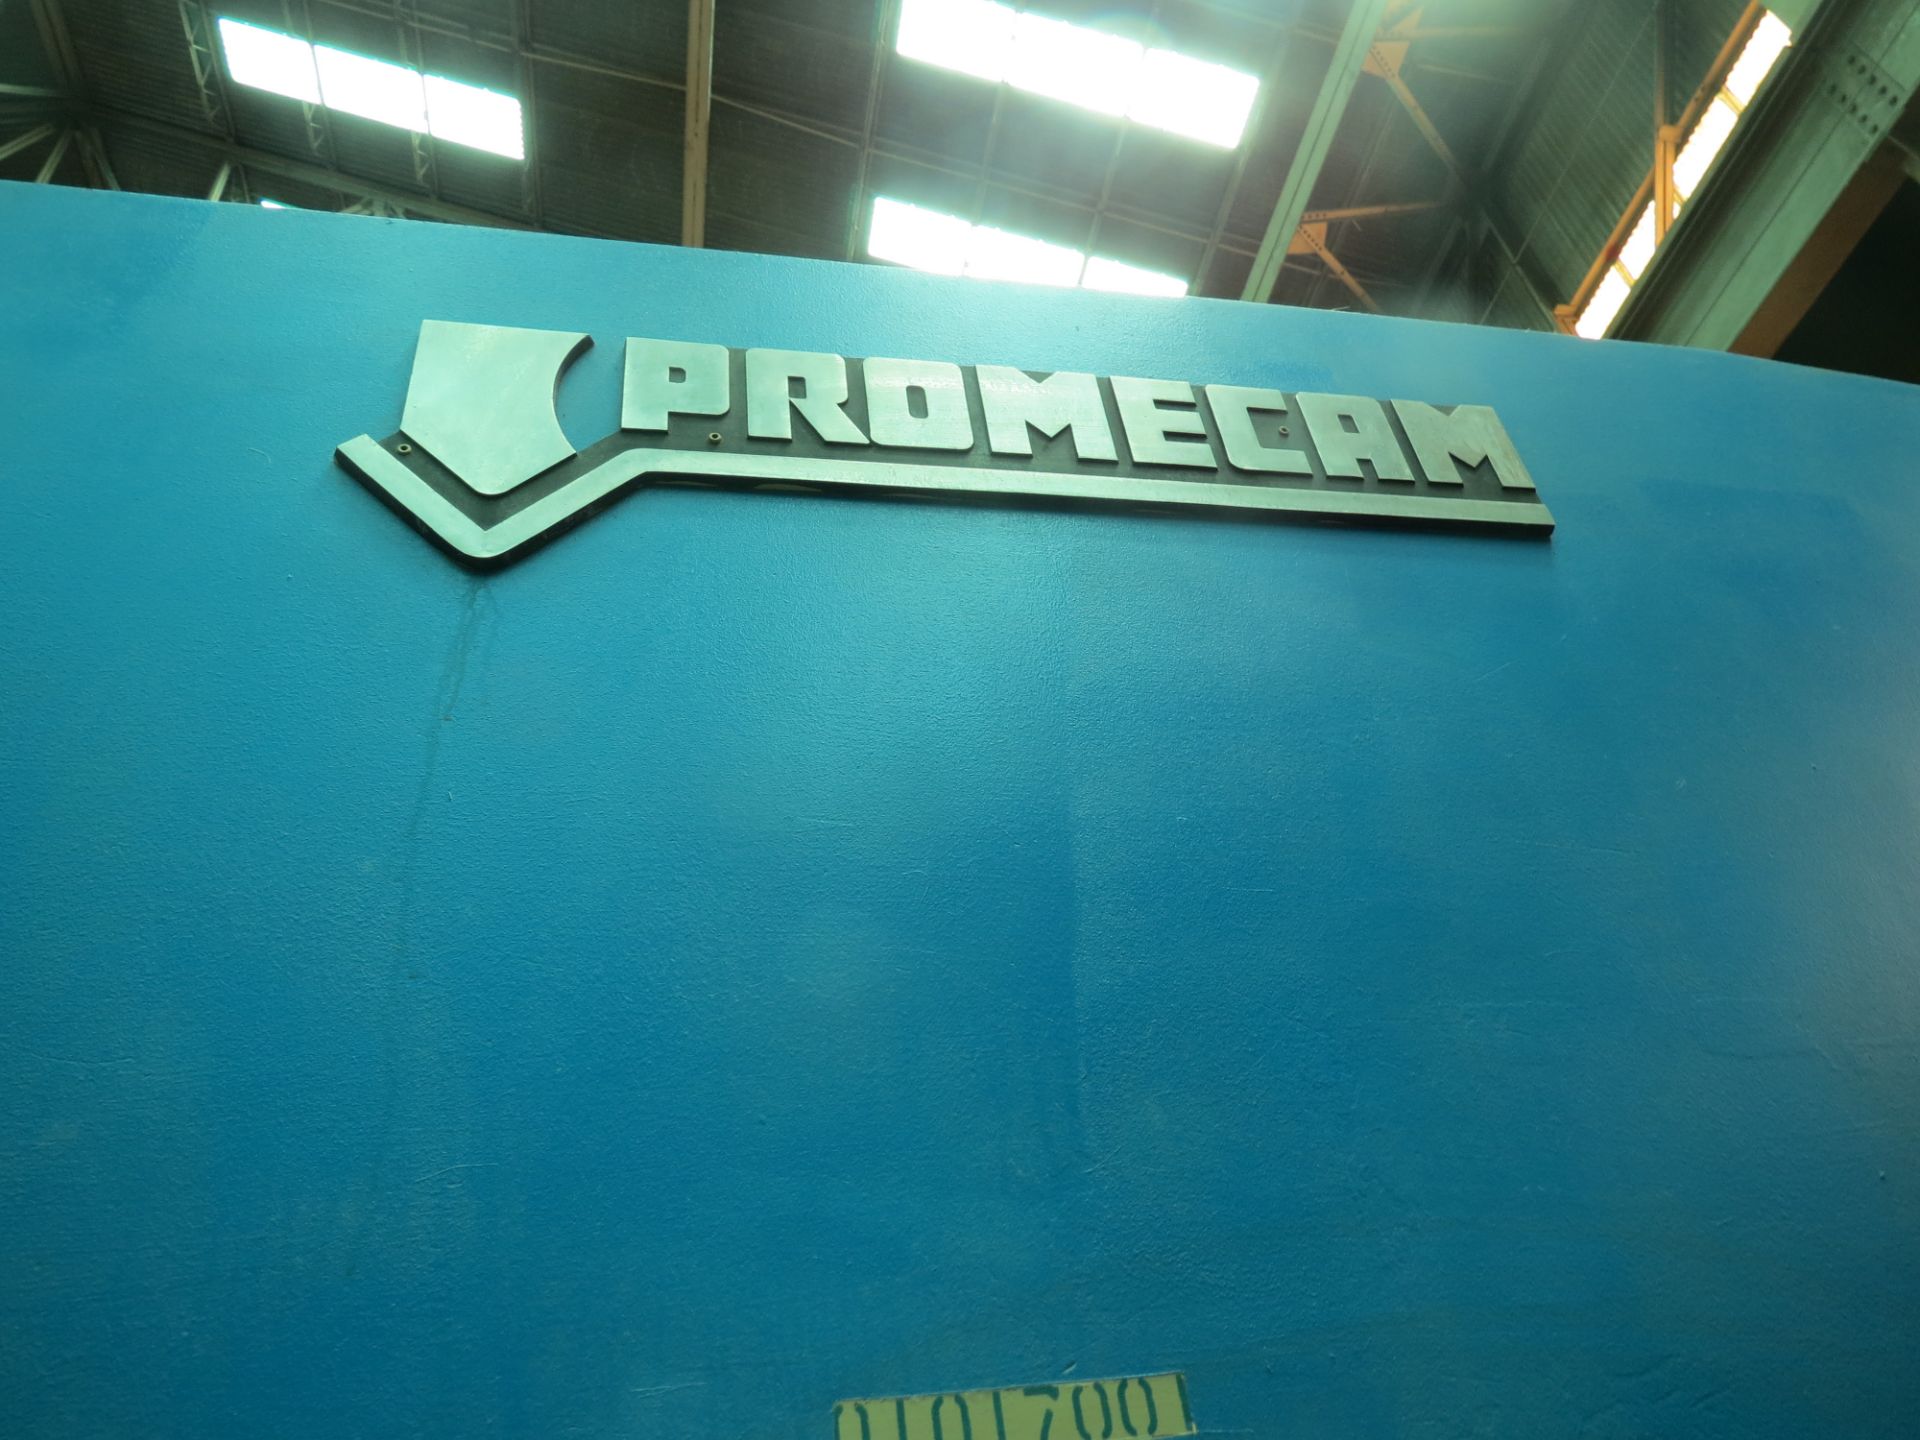 Promecam RG 154 150 Ton, 13’ Press Brake - Image 3 of 9